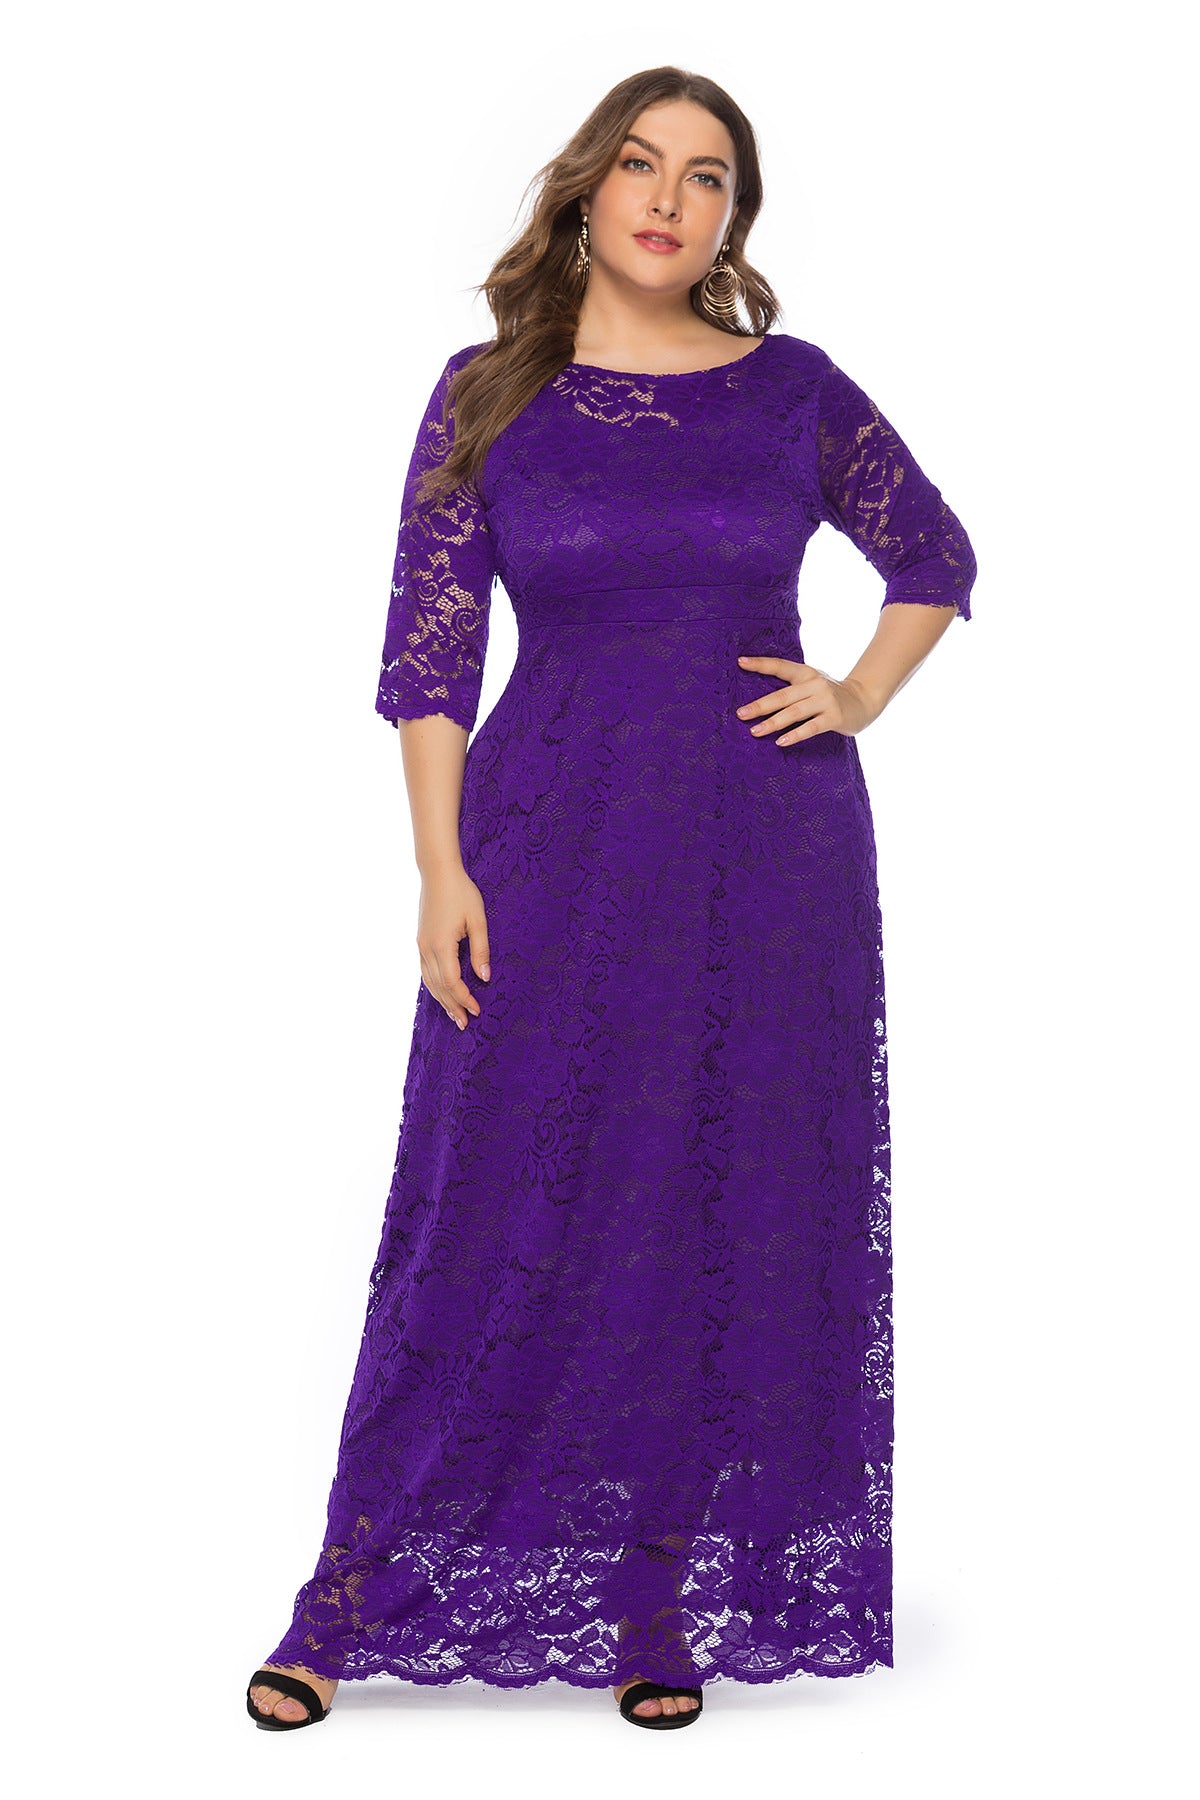 Plus Size Women New Hollow Lace Pocket Dress  dresses Thecurvestory